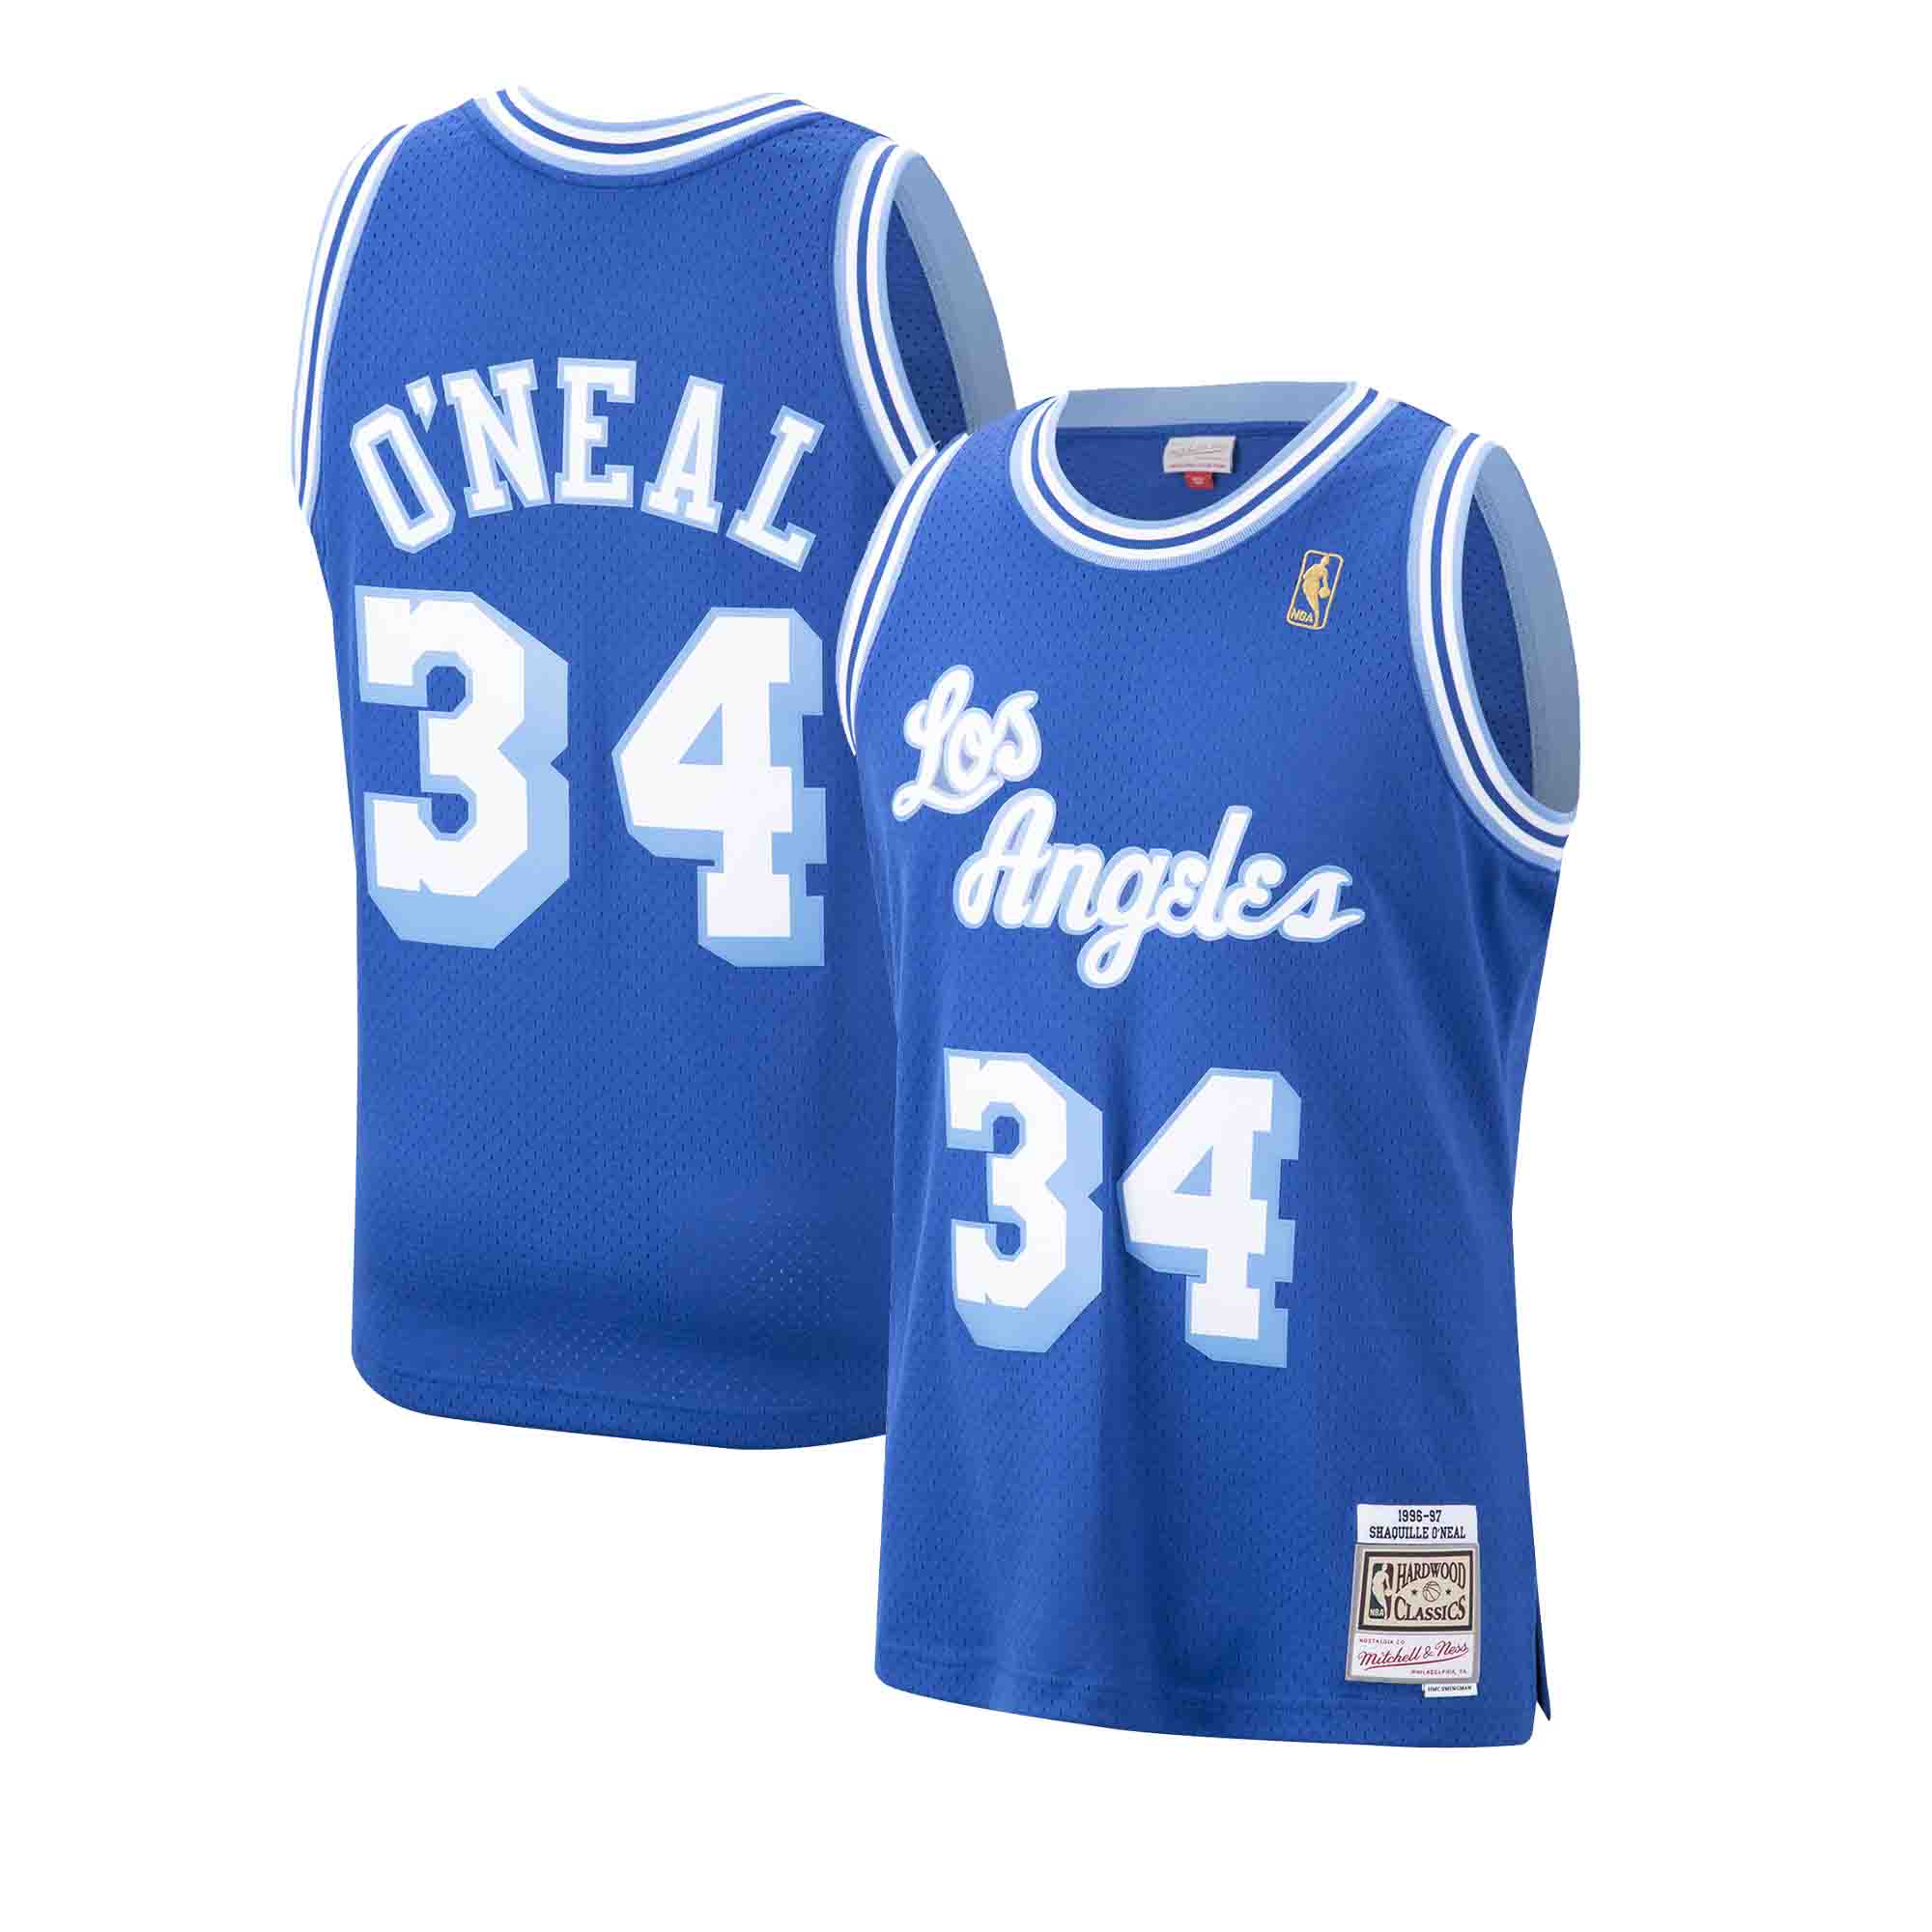 Los Angeles Lakers Apparel, Lakers Merchandise, Gear